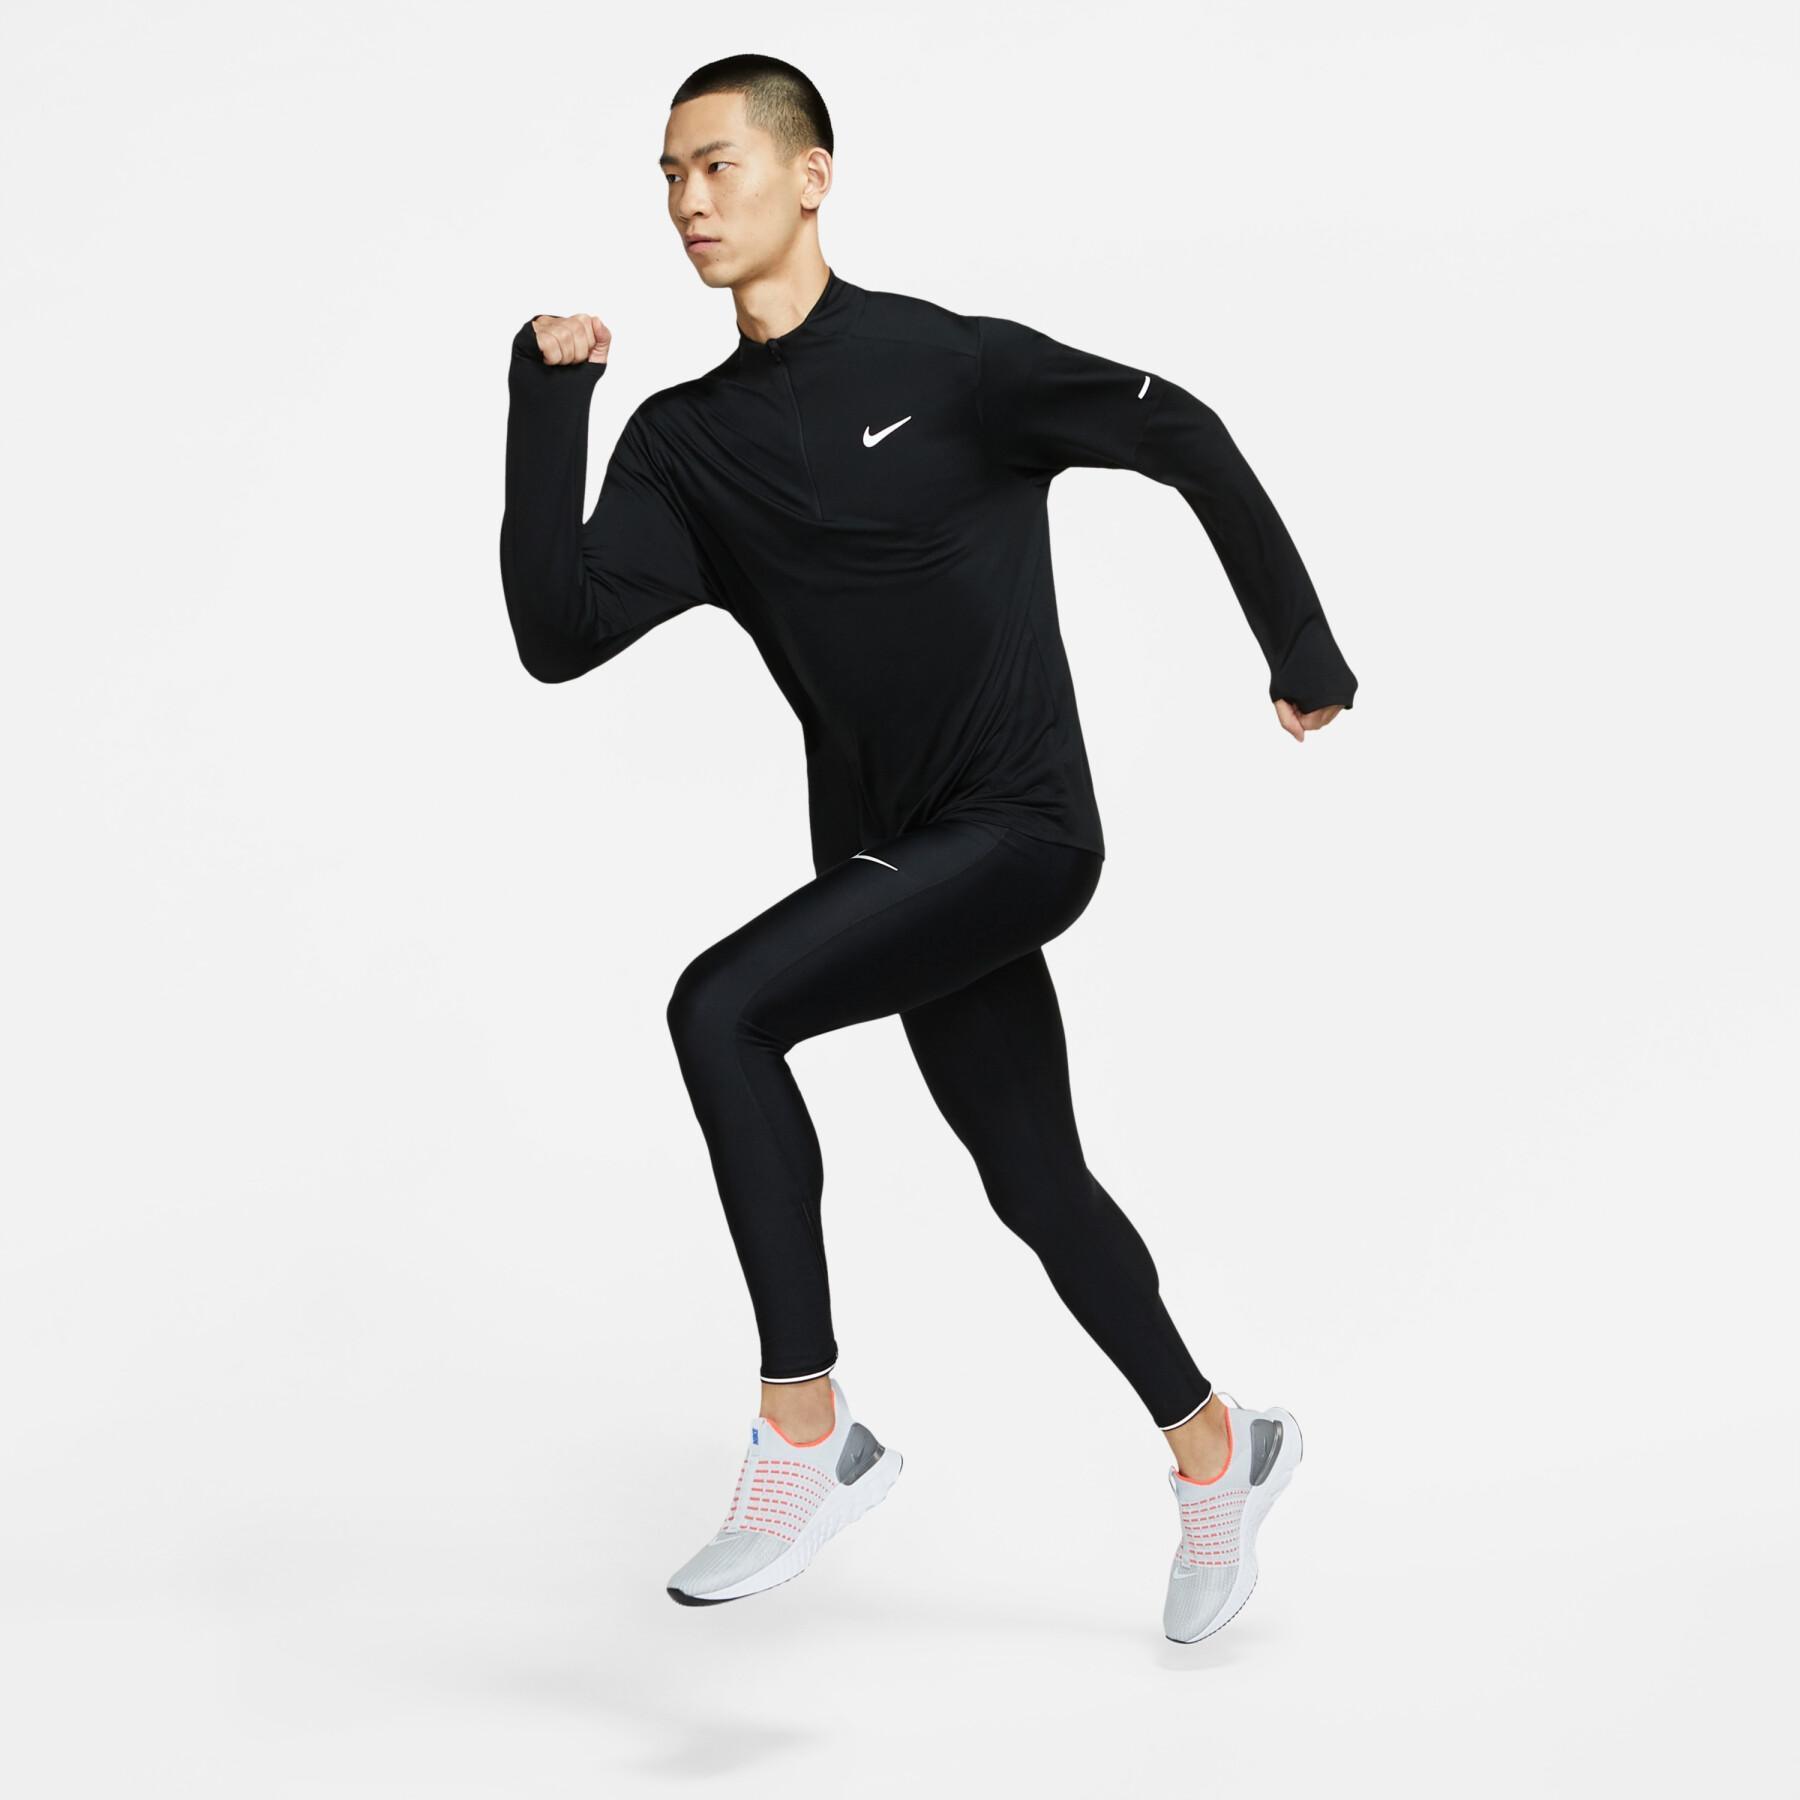 Jaqueta Nike dynamic fit elmnt top hz